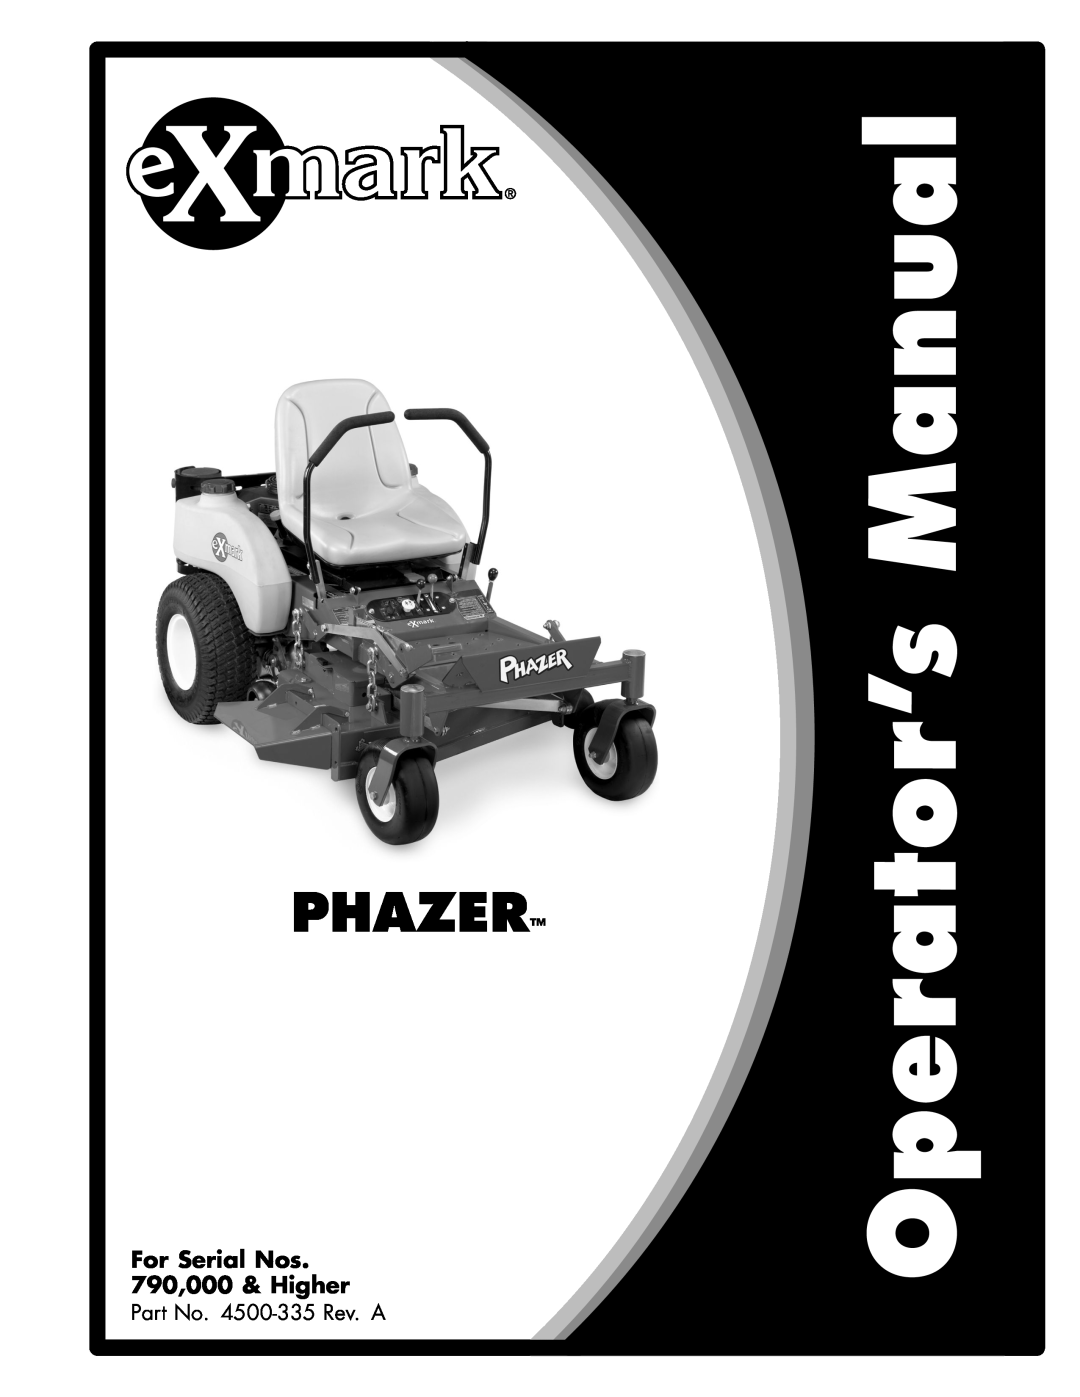 Exmark PHZ19KA343CA manual Phazer, For Serial Nos 790,000 & Higher 